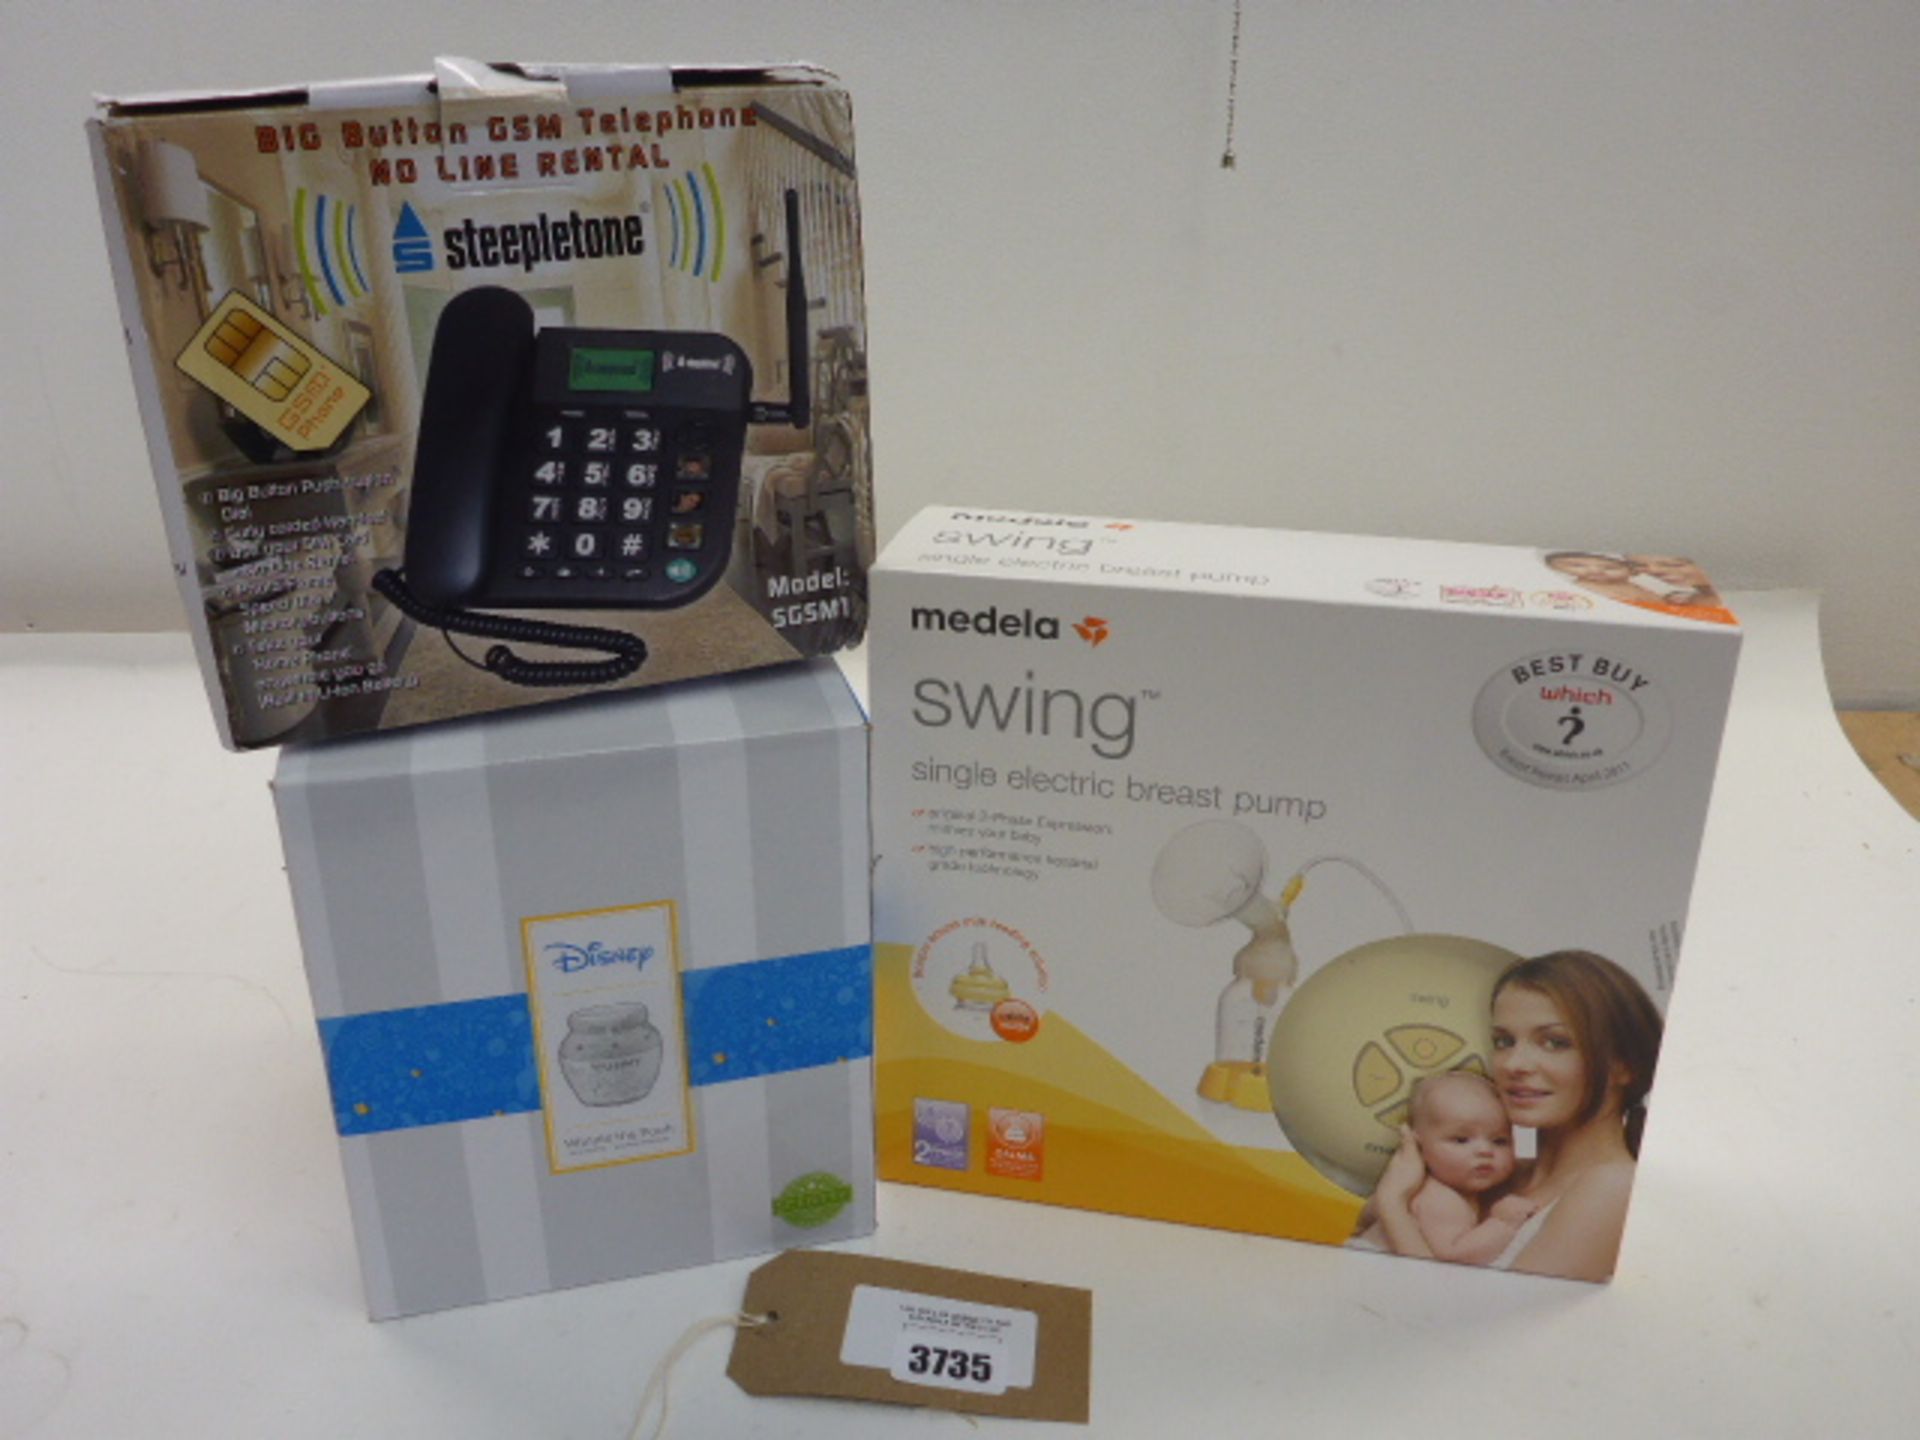 Medela swing single electric breast pump, Steepletone big button telephone and Disney Scentsy warmer